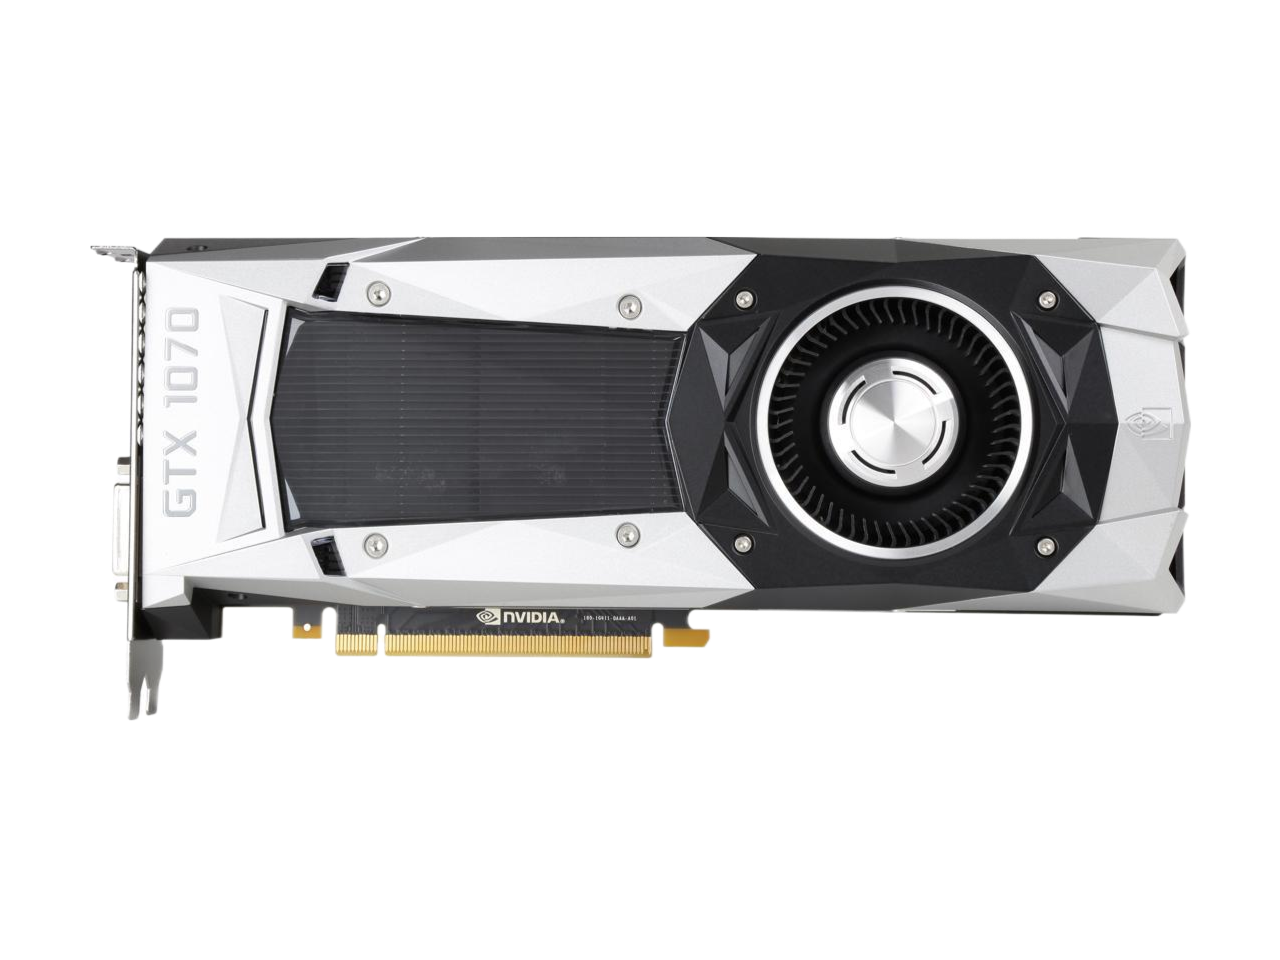 ASUS GeForce GTX 1070 8GB Founders Edition 256-bit GDDR5 Video Card  GTX1070-8G-GAMING